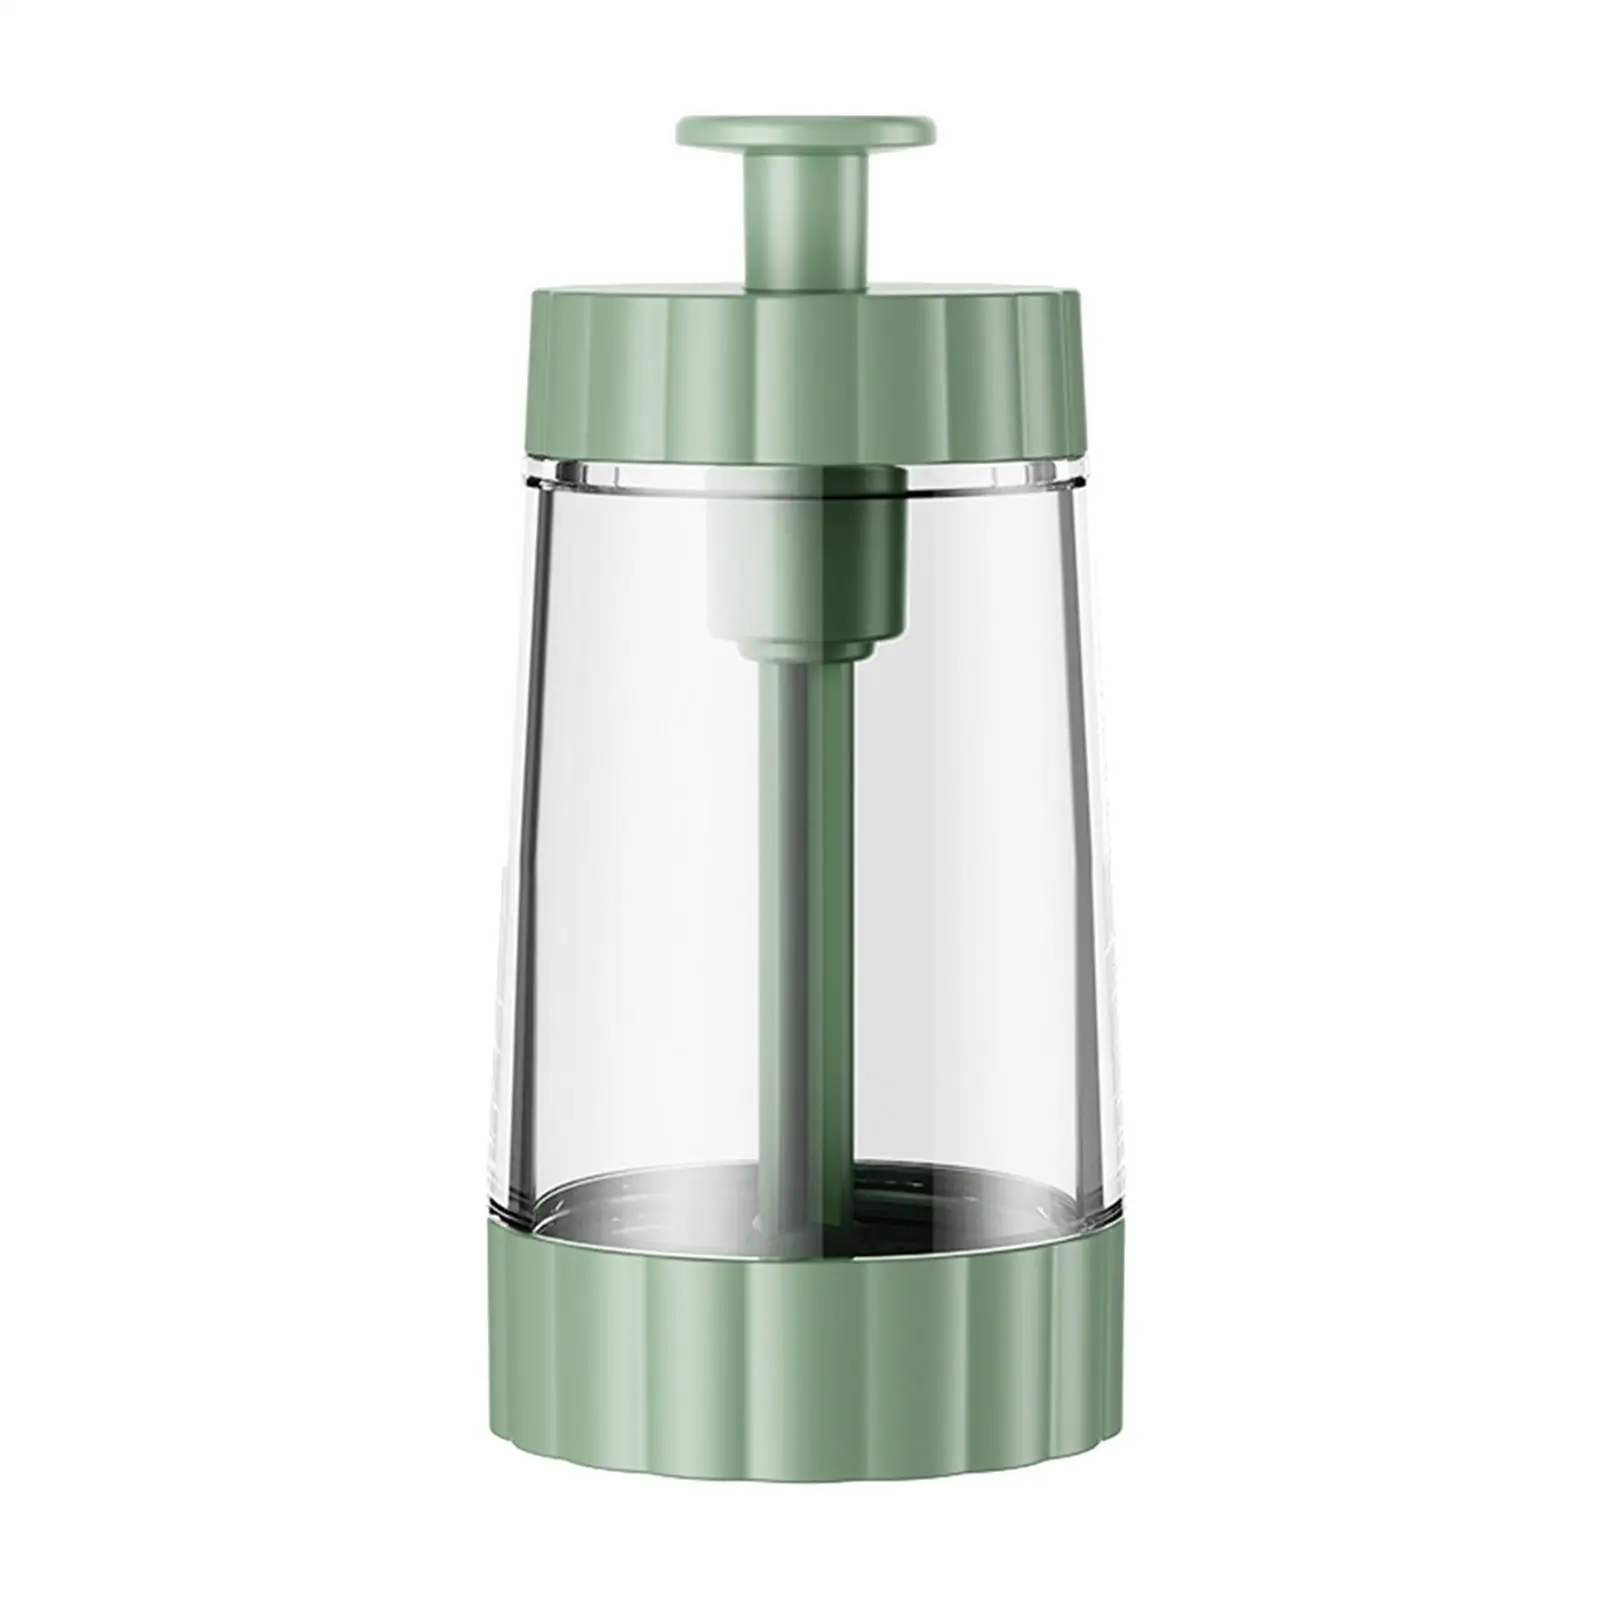 Salt Shaker Precise Quantitative Sealed Measuring Seasoning Bottle Sugar Shaker Pepper Container for Cumin Powder Pepper Cooking